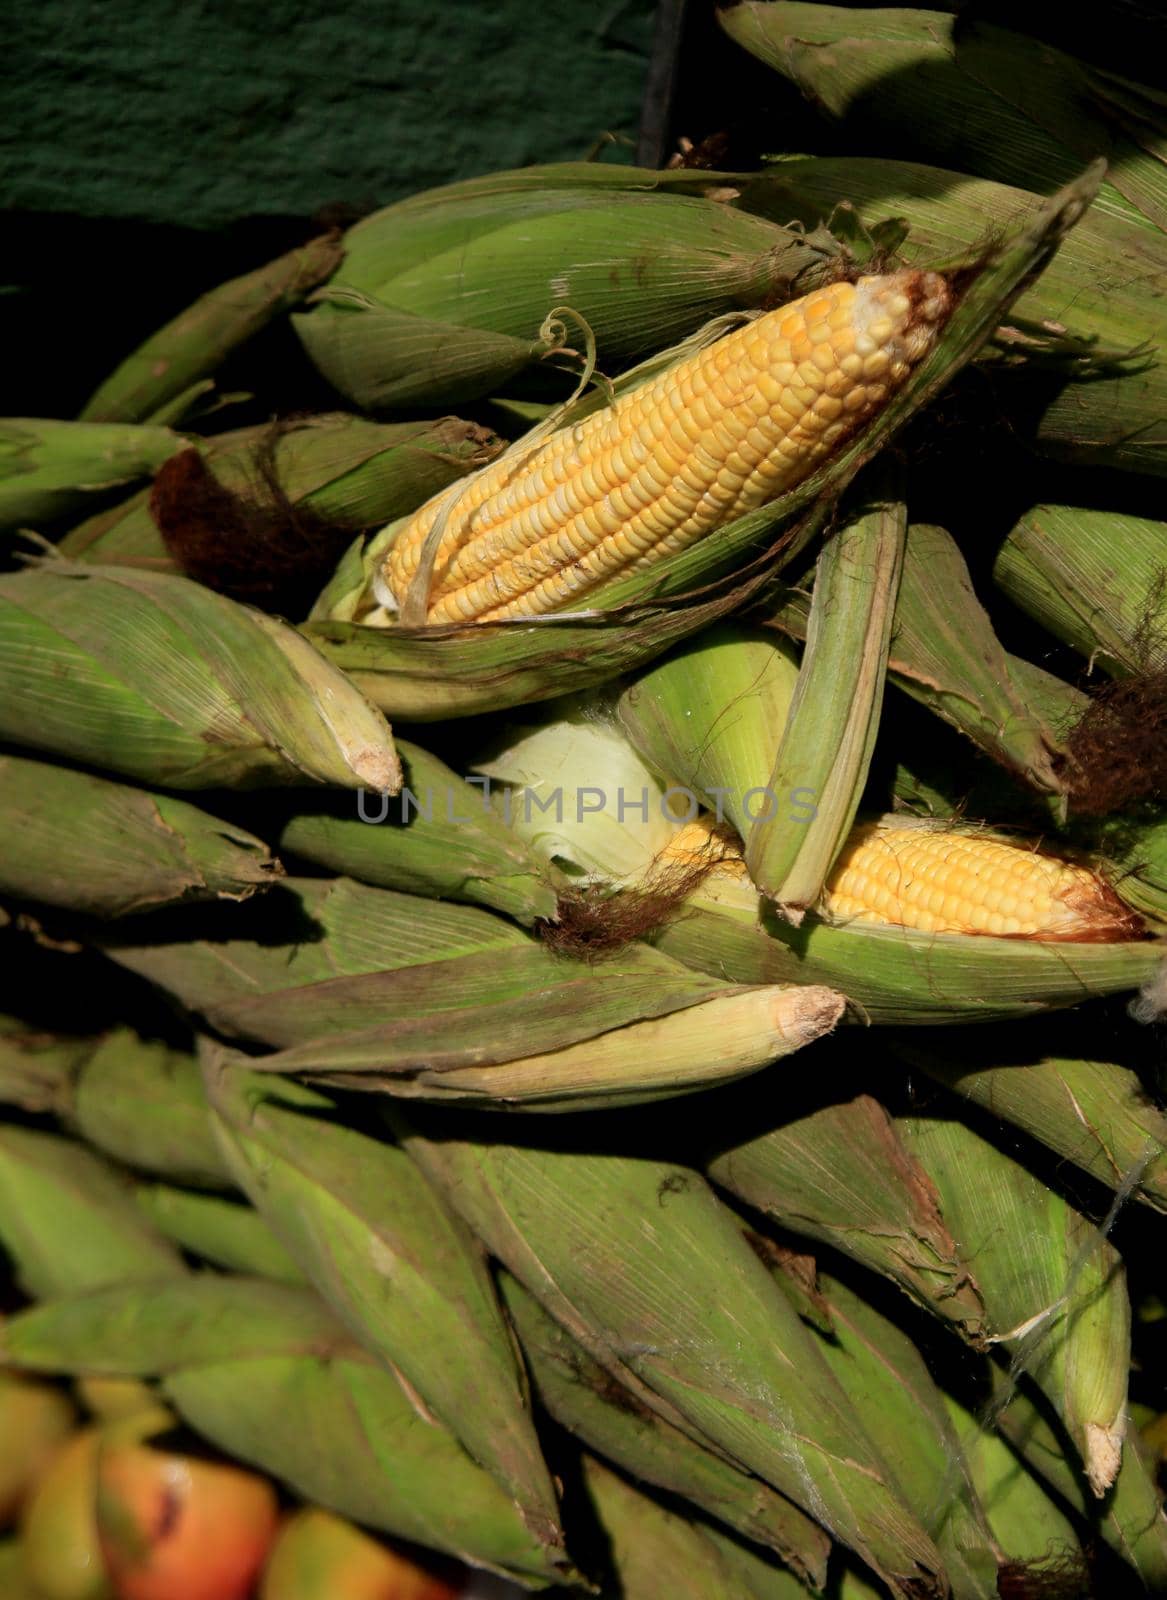 salvador, bahia, brazil - june 18, 2021: Green corn is seen for sale in open fair in Salvador city.
